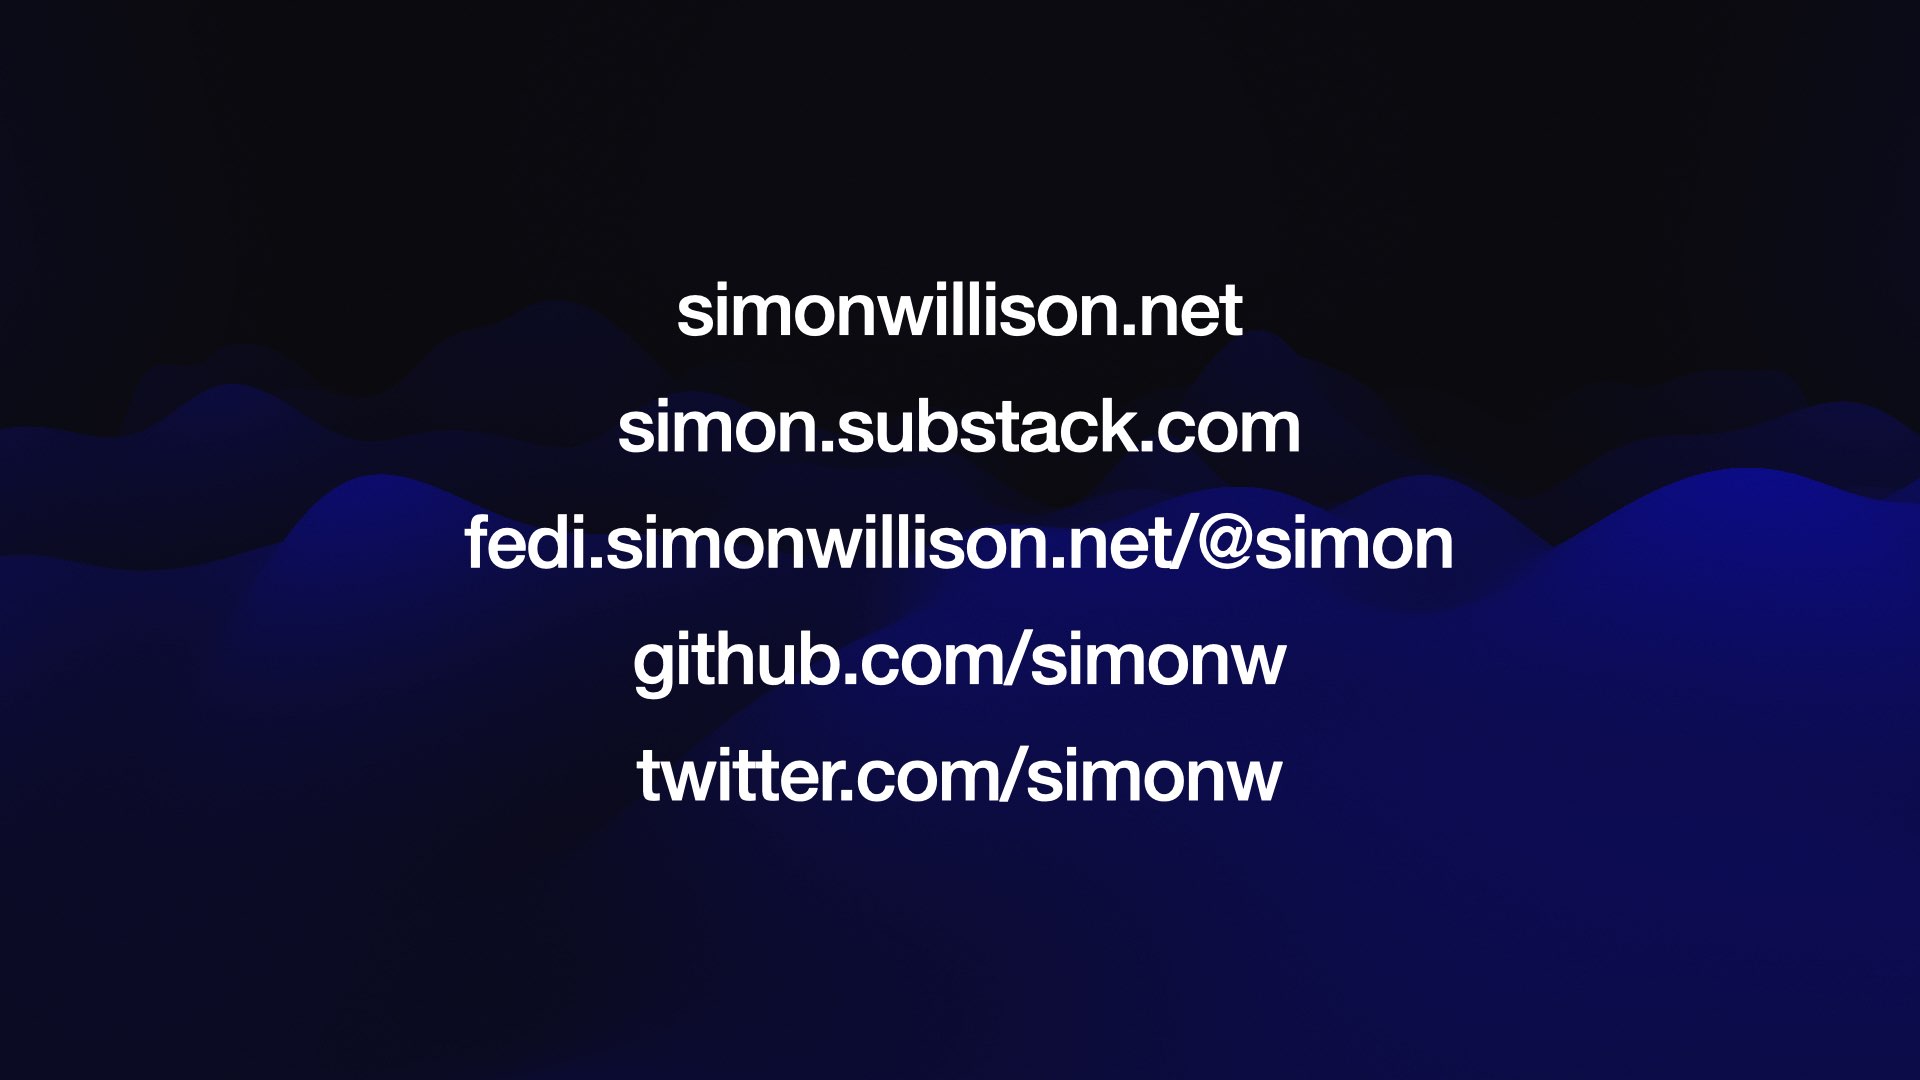 simonwillison.net simon.substack.com fedi.simonwillison.net/@simon github.com/simonw twitter.com/simonw